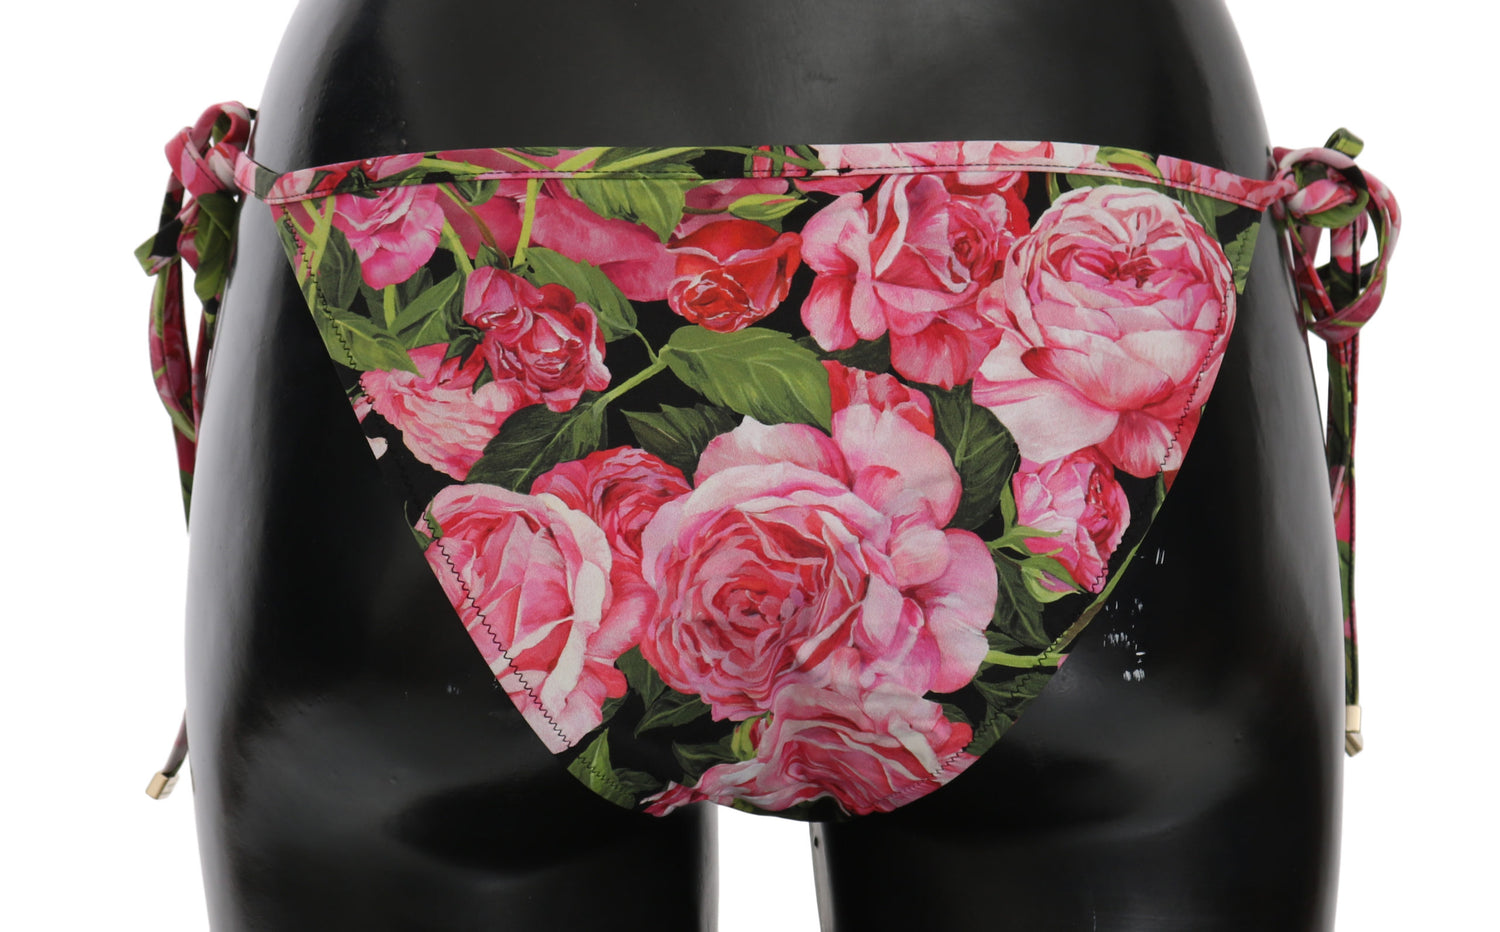 Dolce & Gabbana Black Pink Rose Print Bottom Bikini Beachwear - DEA STILOSA MILANO